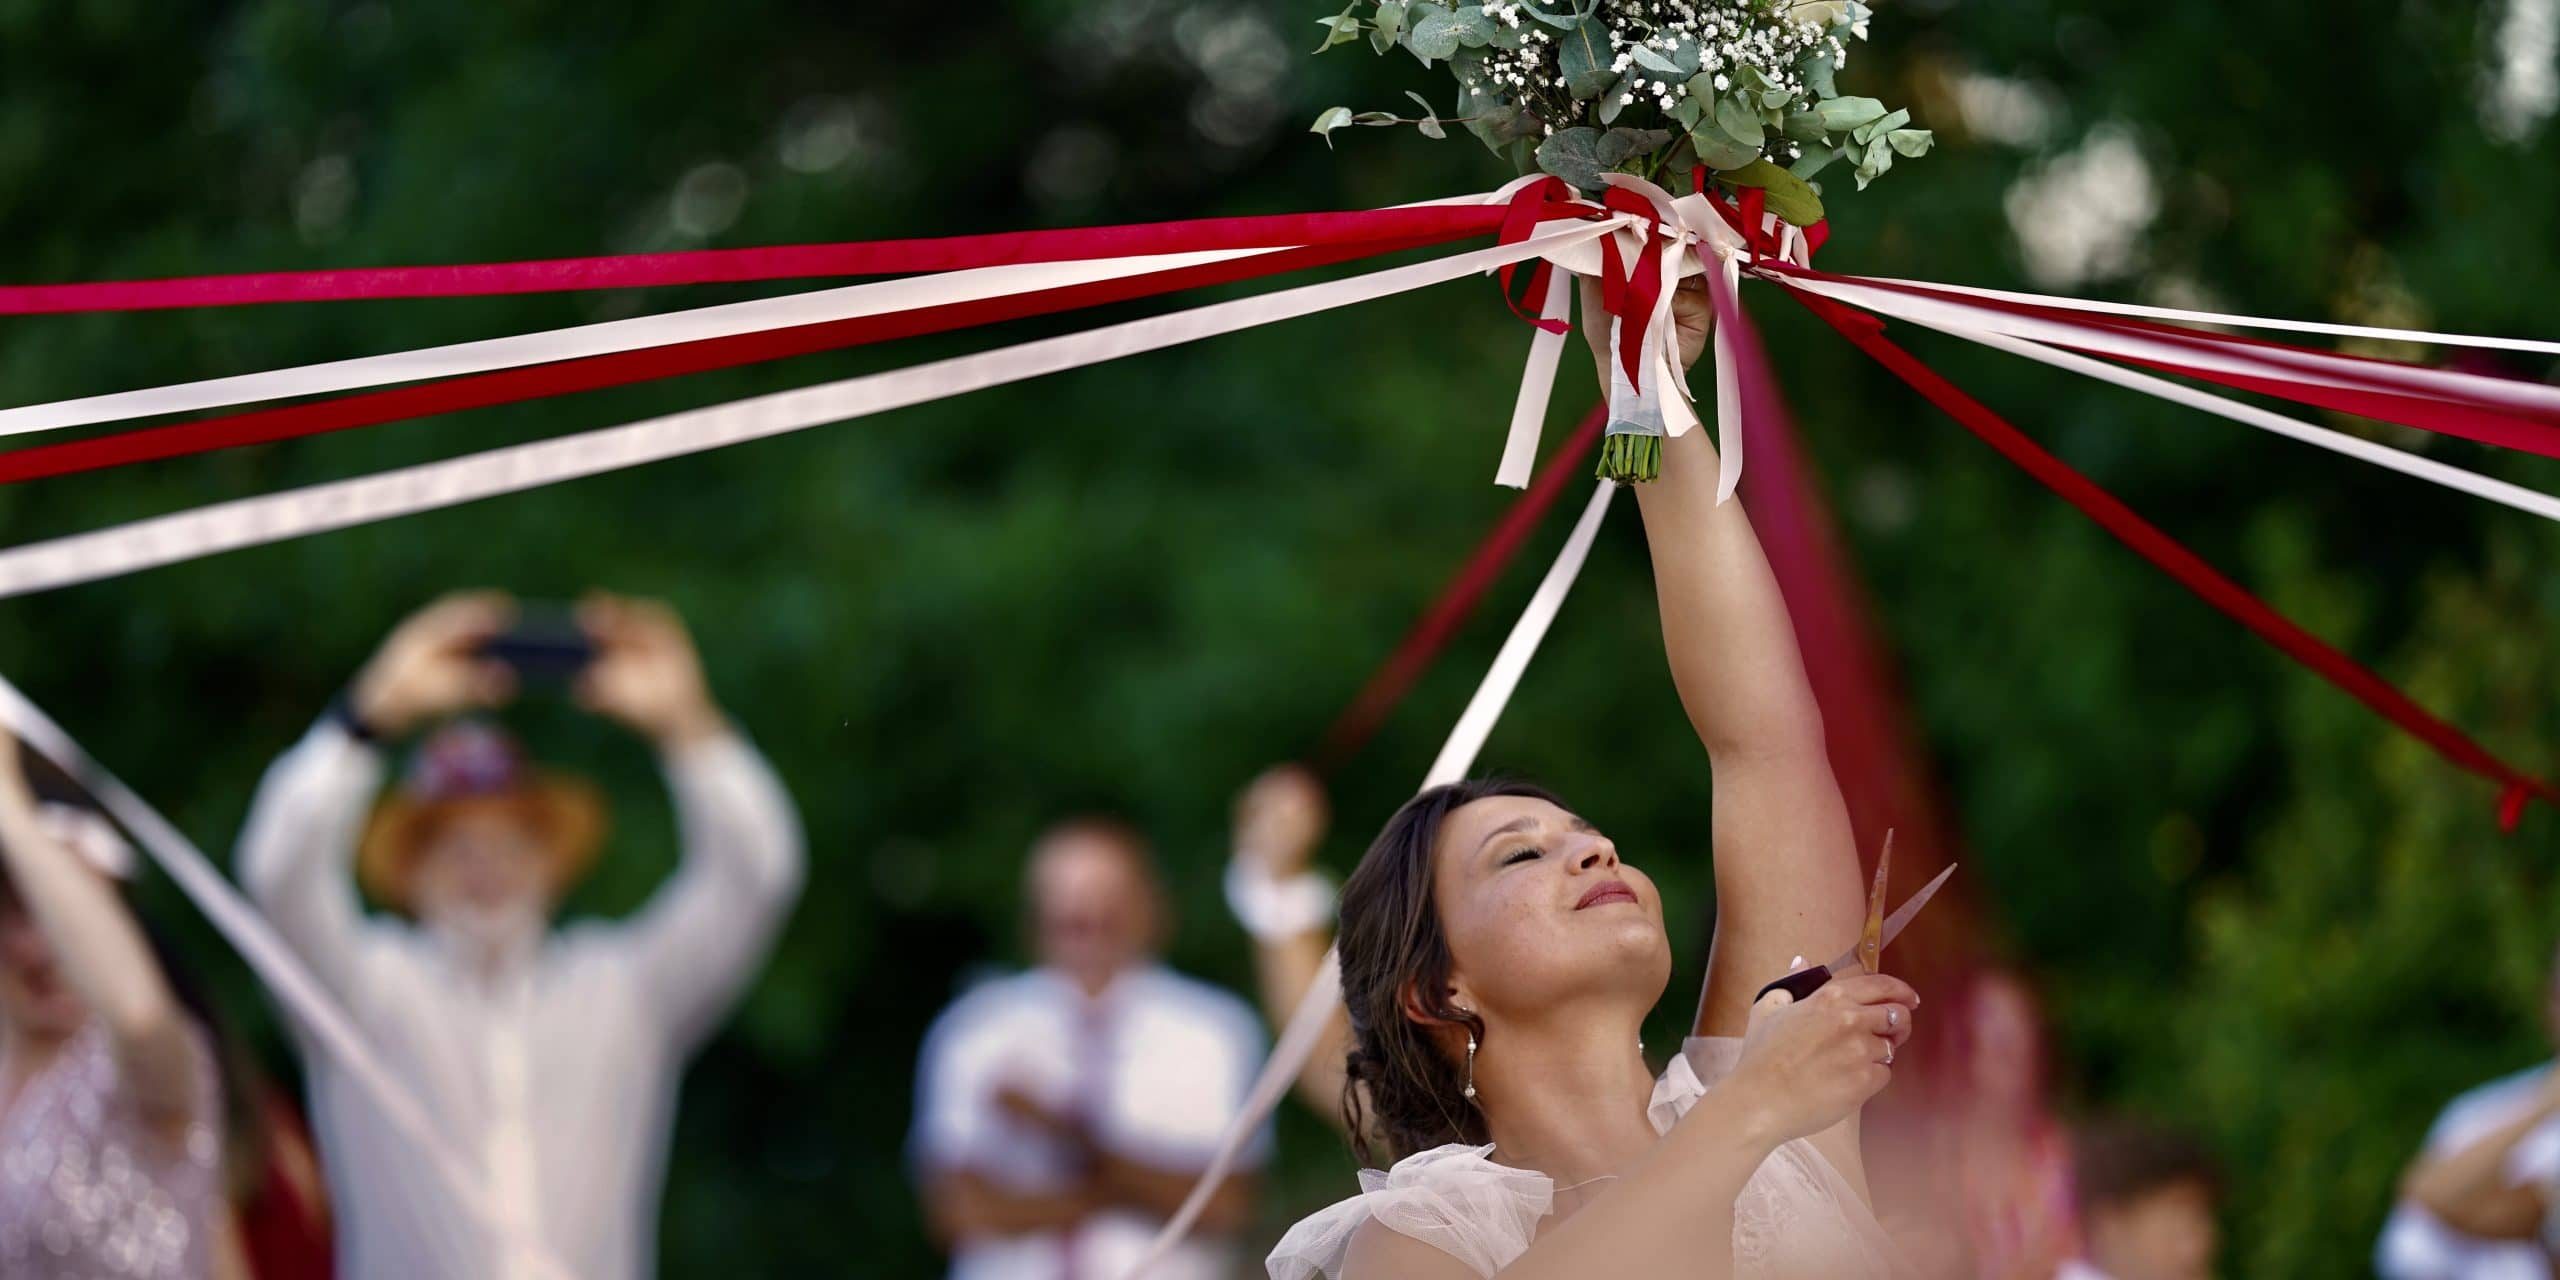 wedding-game-to-win-the-bride-s-bouquet-2022-03-01-08-05-34-utc